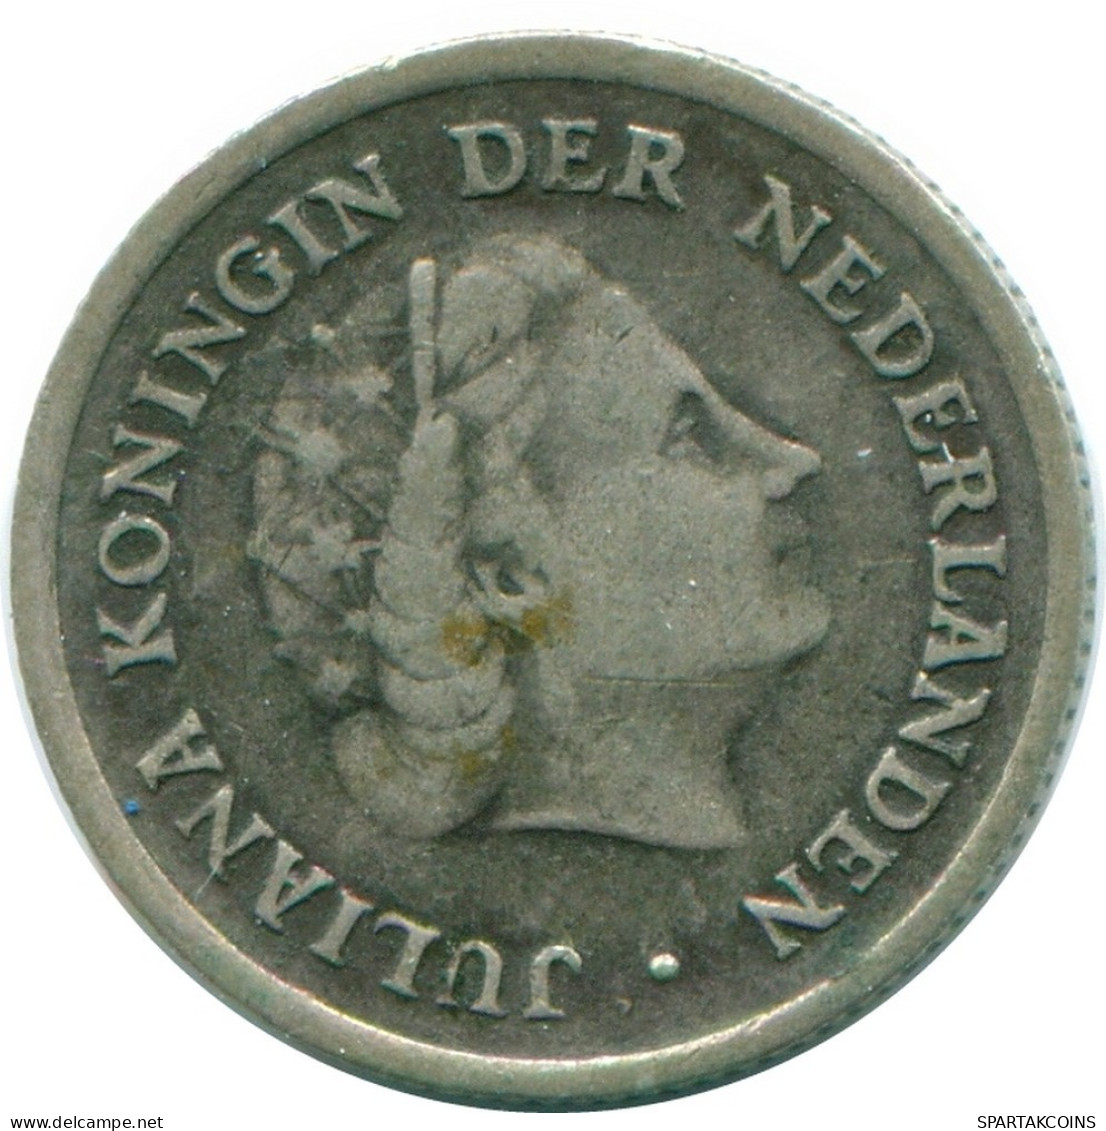 1/10 GULDEN 1959 NETHERLANDS ANTILLES SILVER Colonial Coin #NL12230.3.U.A - Netherlands Antilles